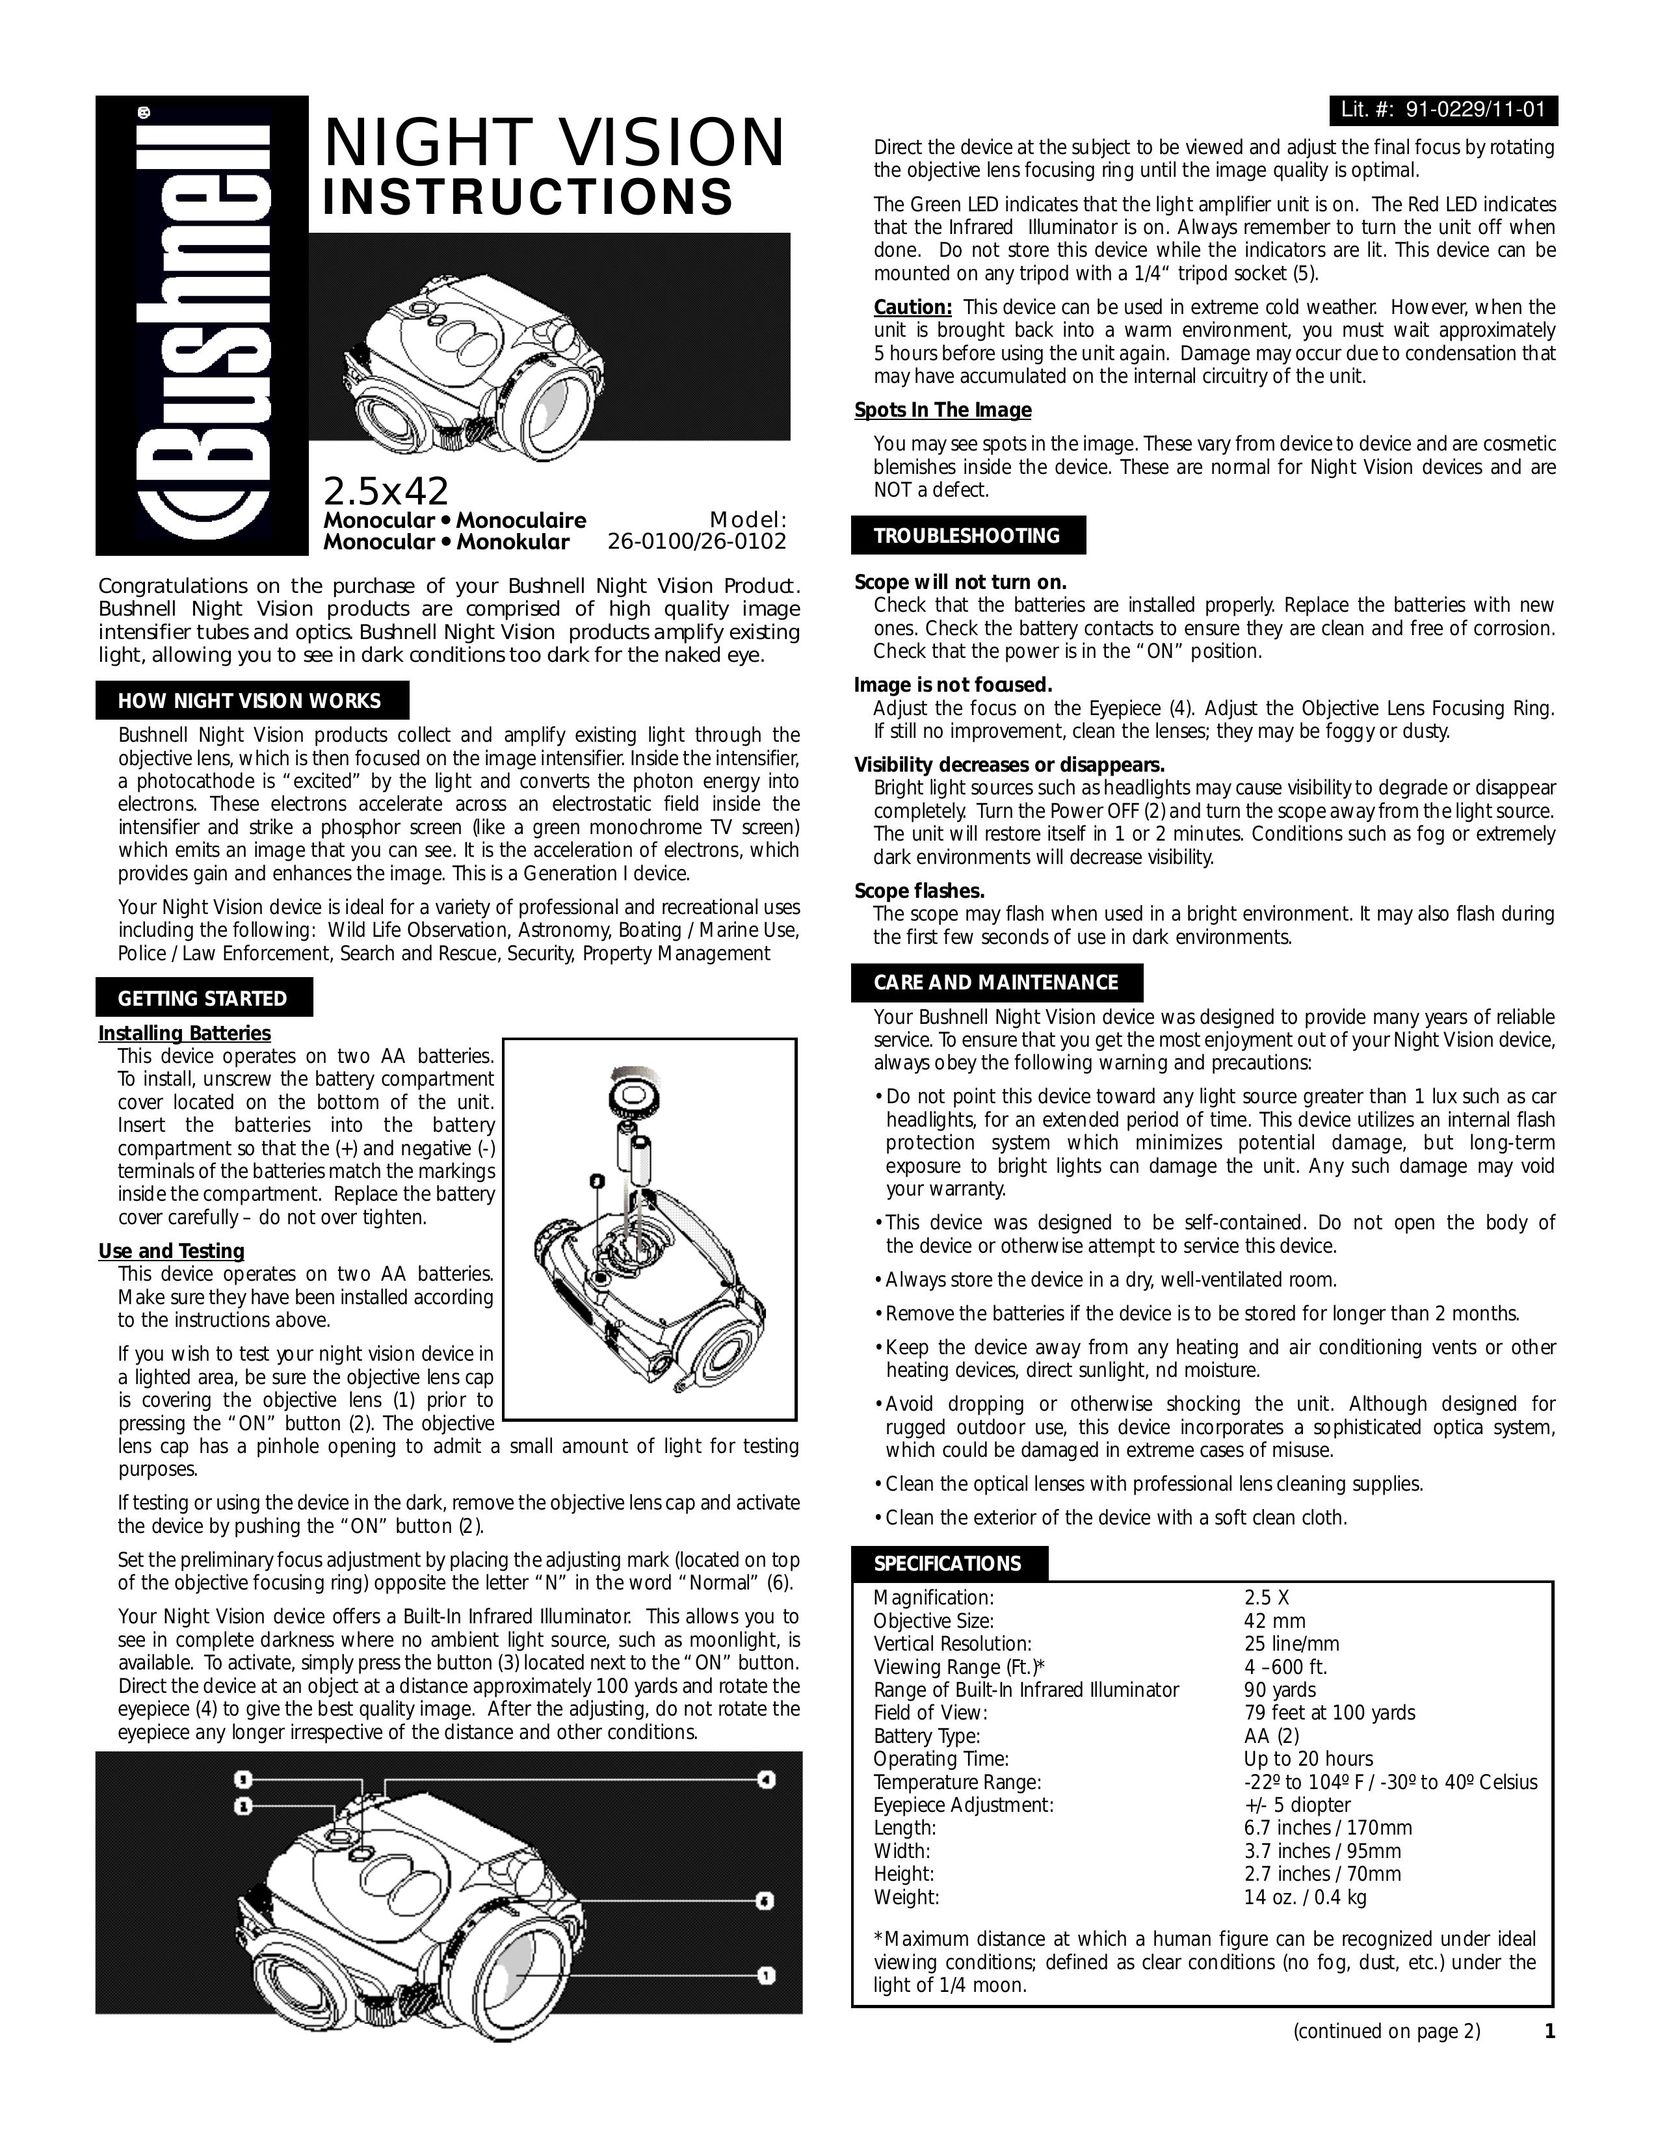 Bushnell 26-0100/26-0102 Lathe User Manual